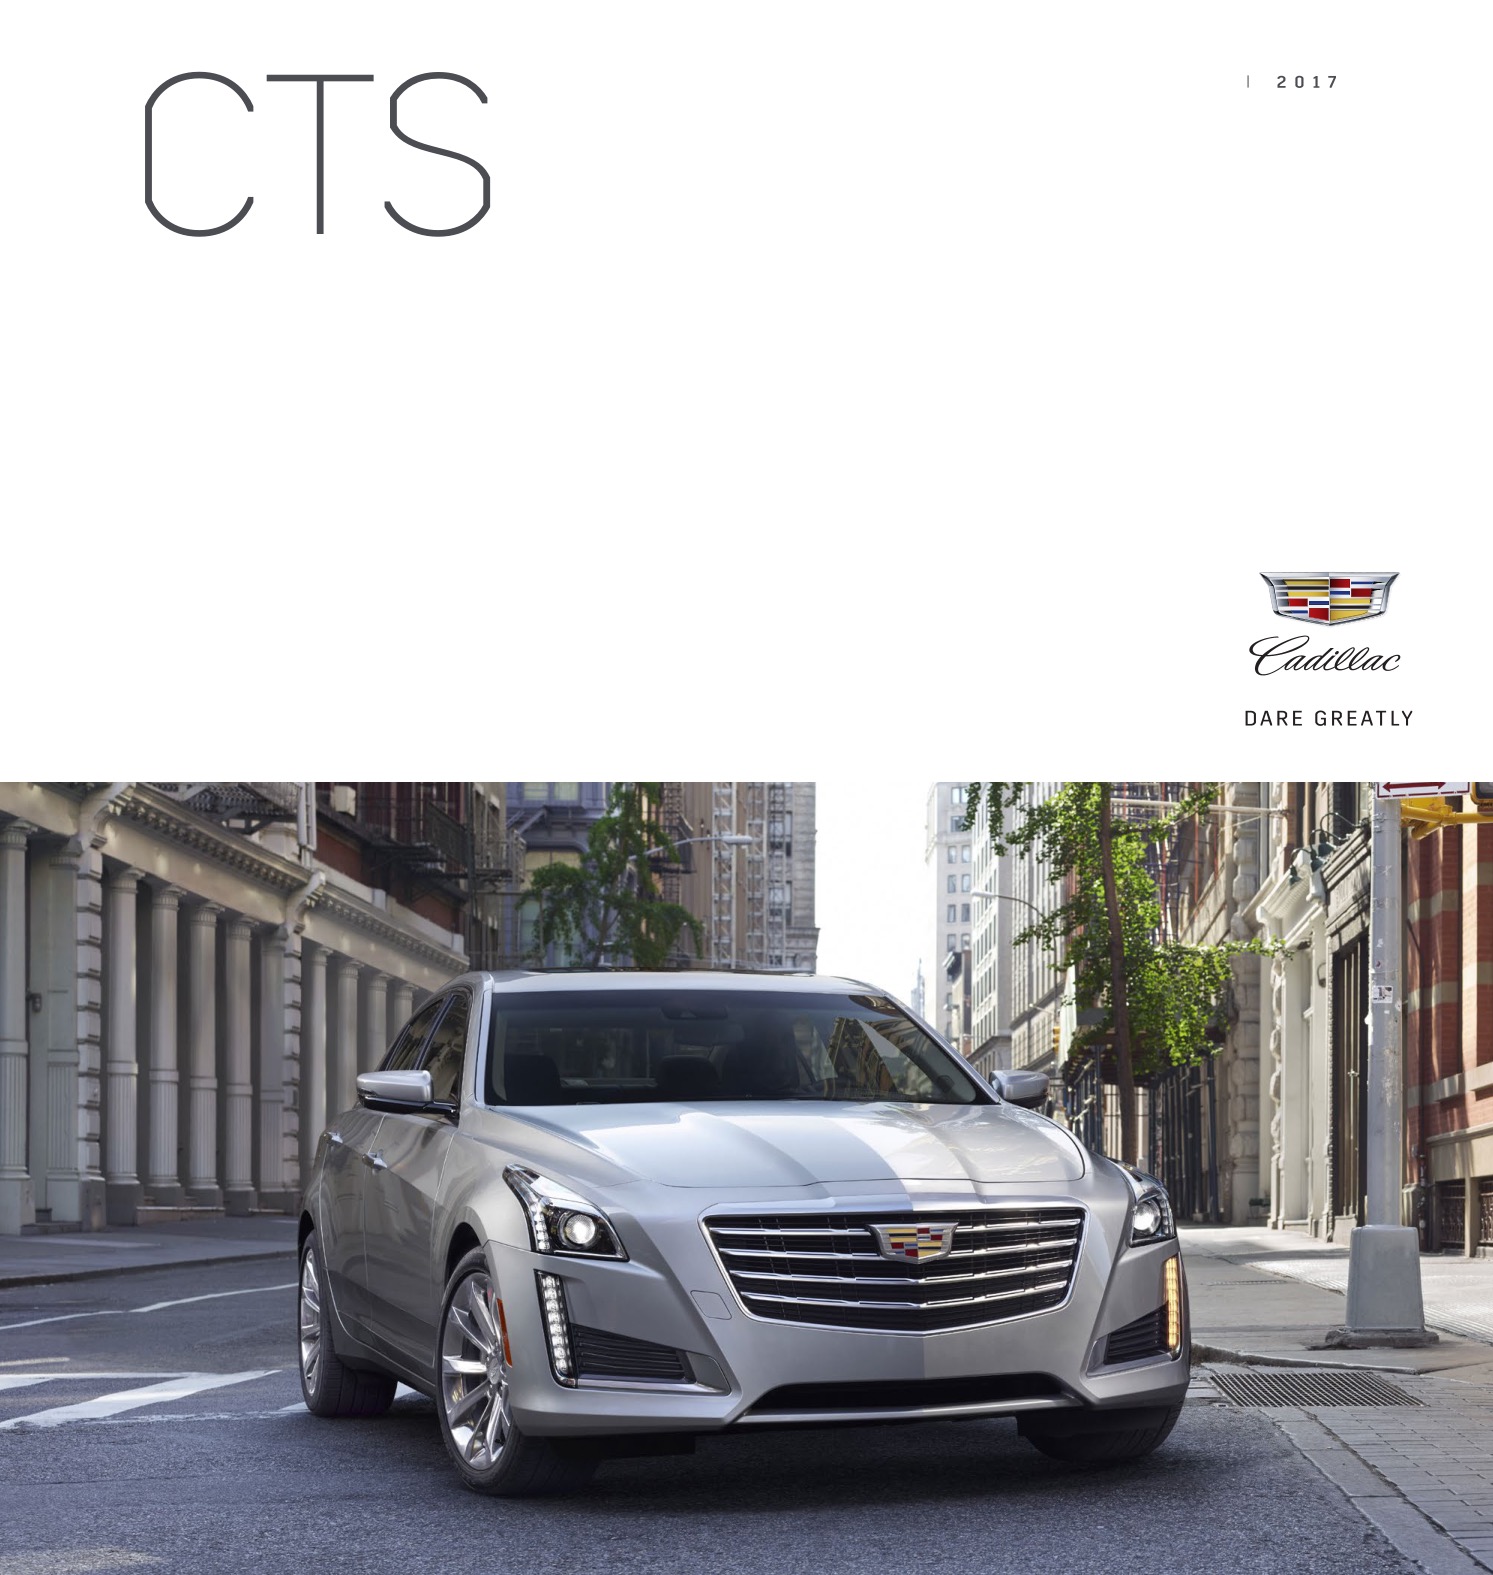 2017 Cadillac CTS Brochure